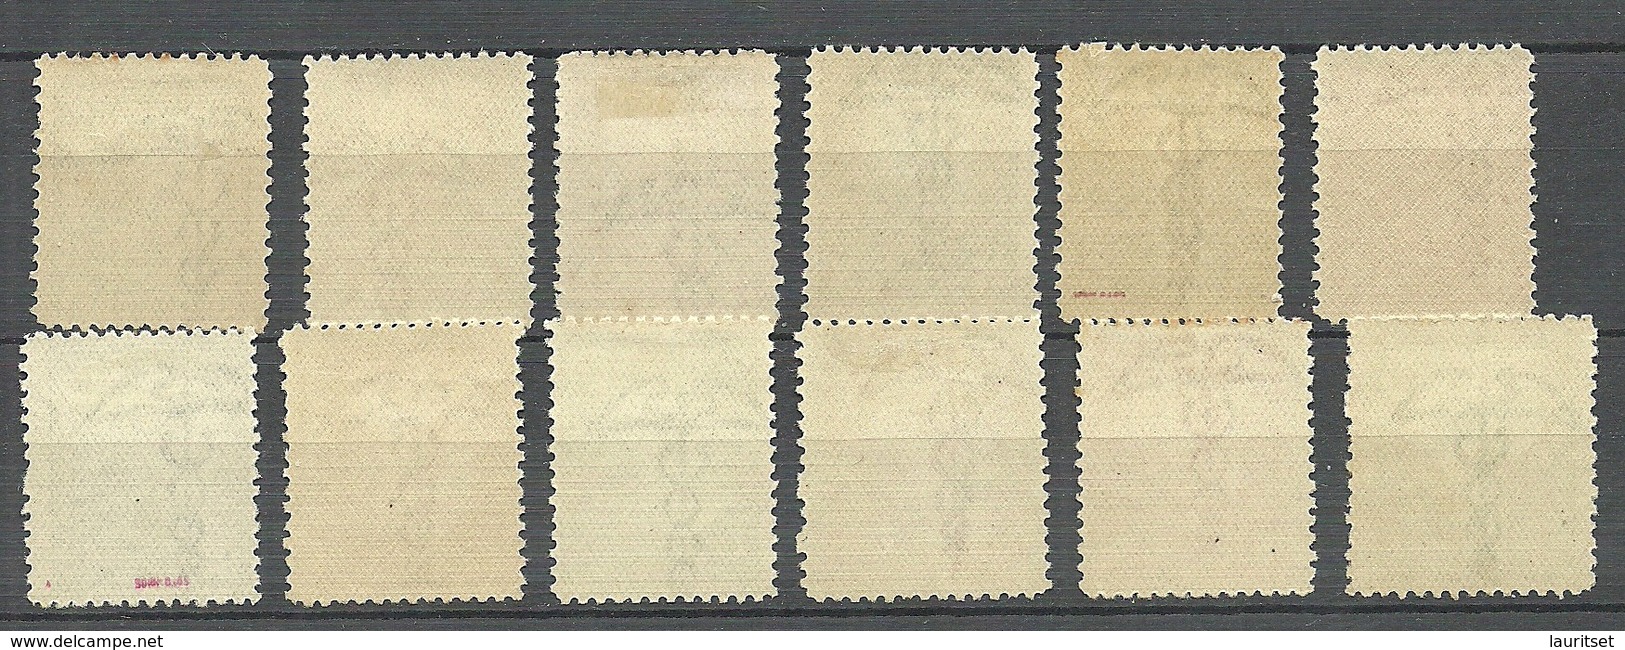 URUGUAY 1923 Michel 267 - 278 Kiebitz * 2 Stamps Are Signed - Uruguay